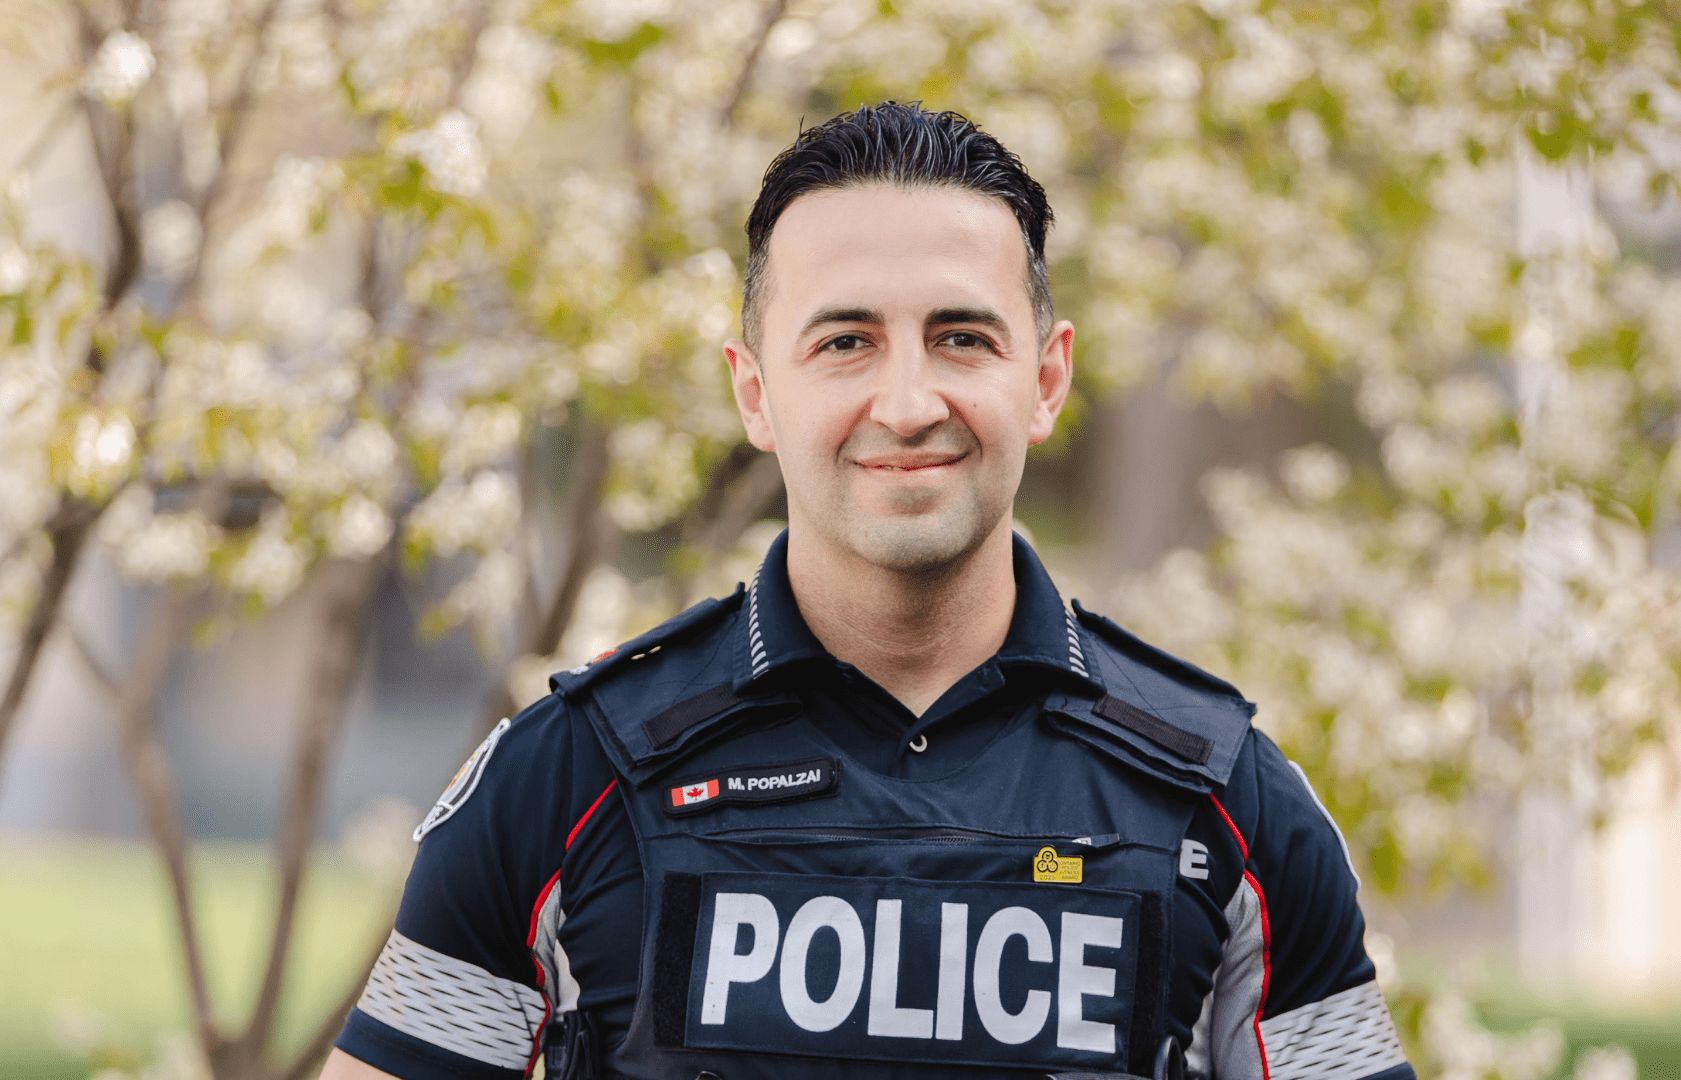 Mustafa Popalzai, now a Detective Constable of the Toronto Police